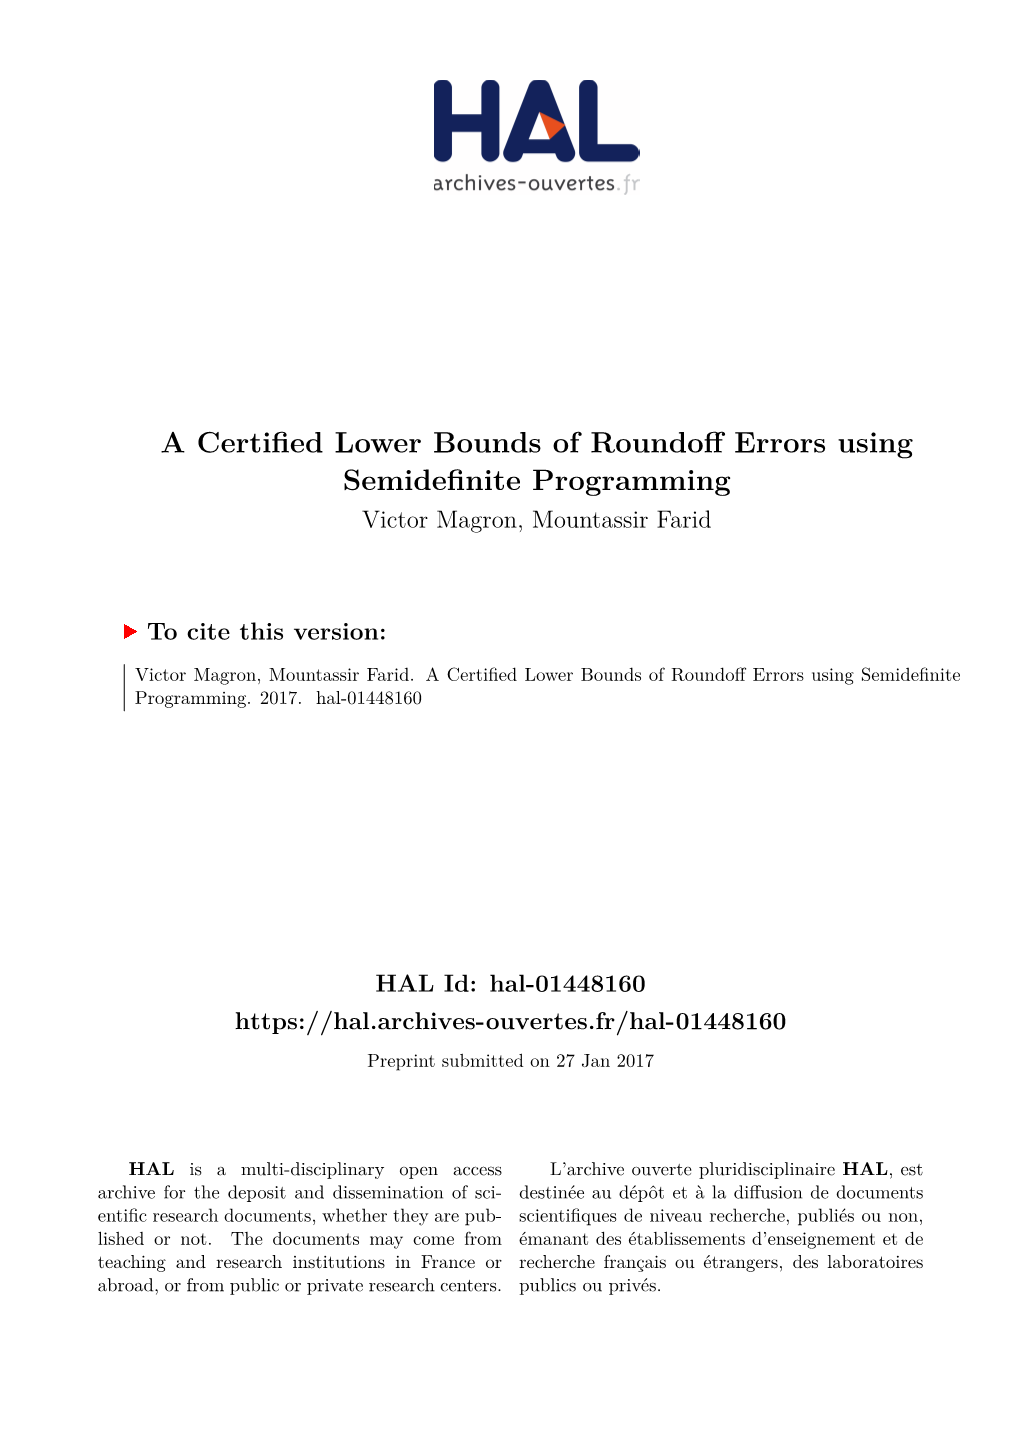 A Certified Lower Bounds of Roundoff Errors Using Semidefinite Programming Victor Magron, Mountassir Farid